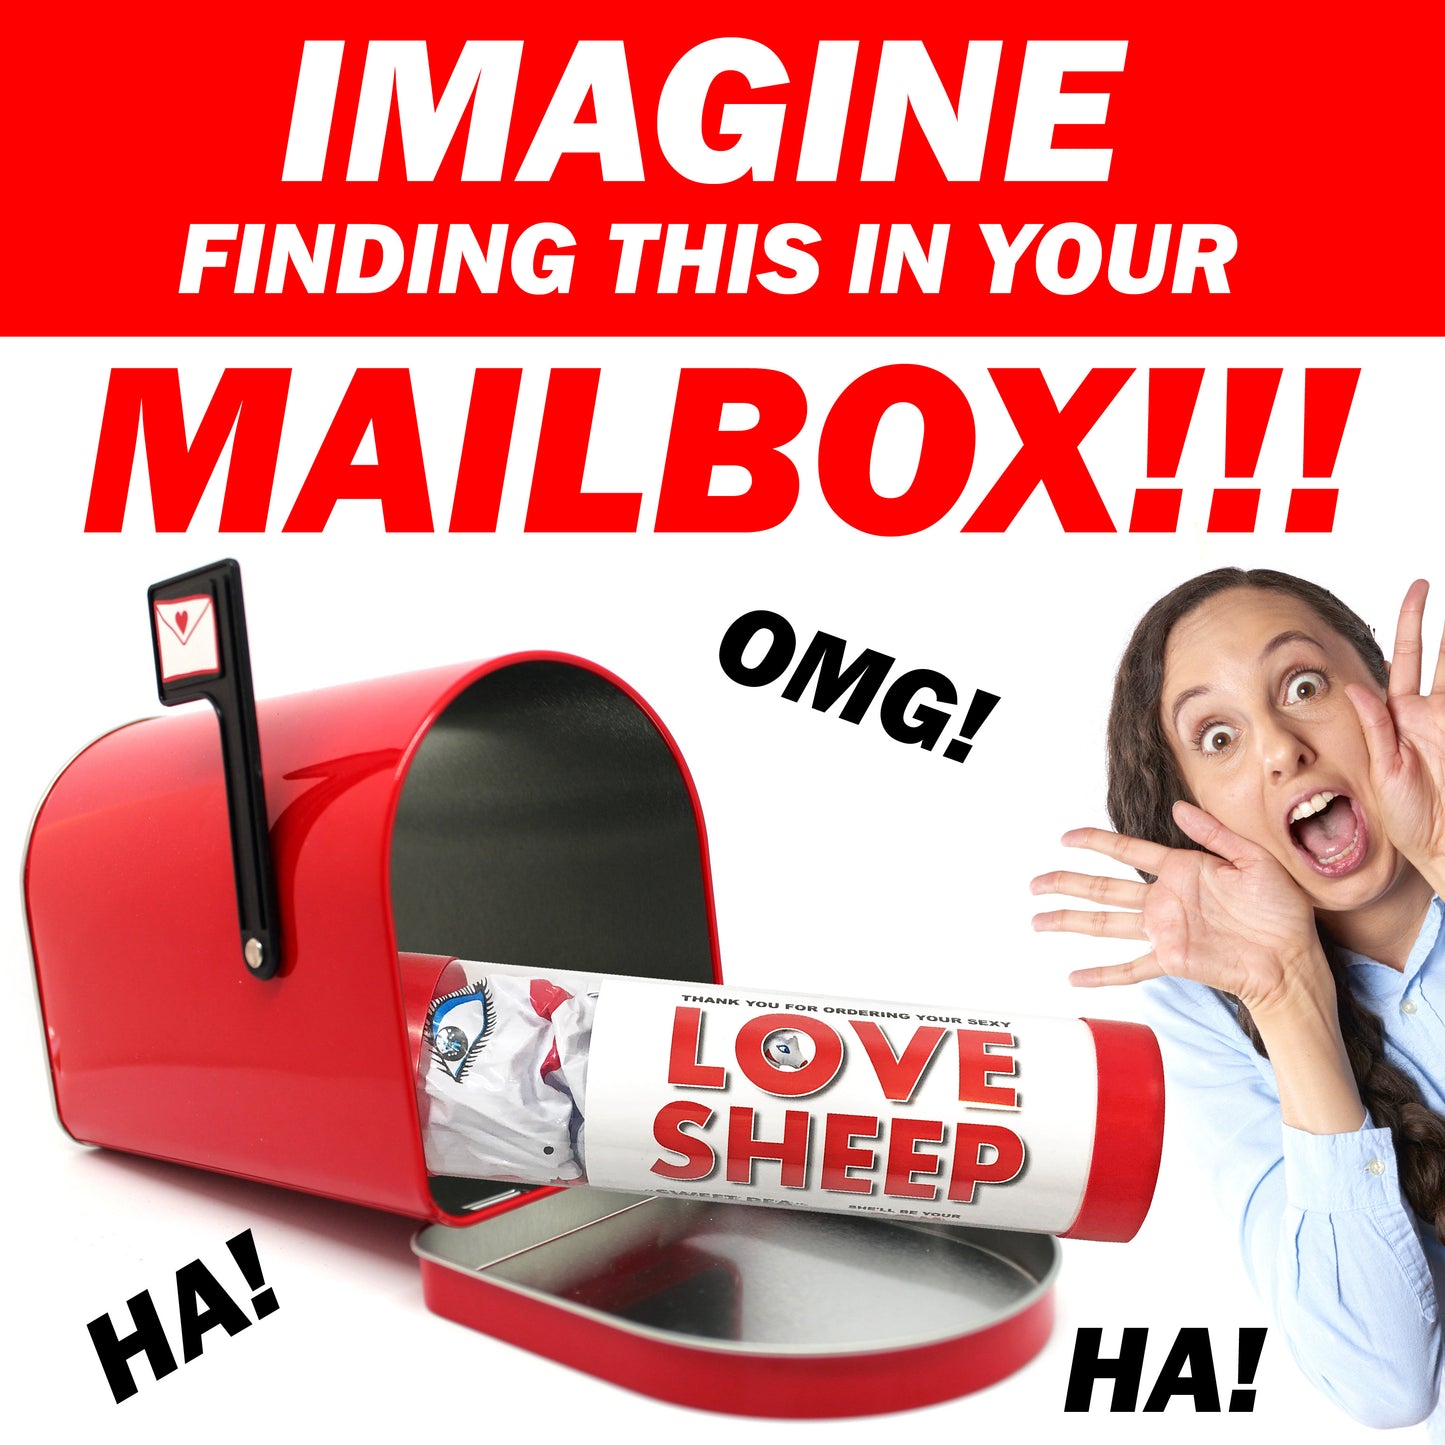 Sexy Love Sheep Prank Mail